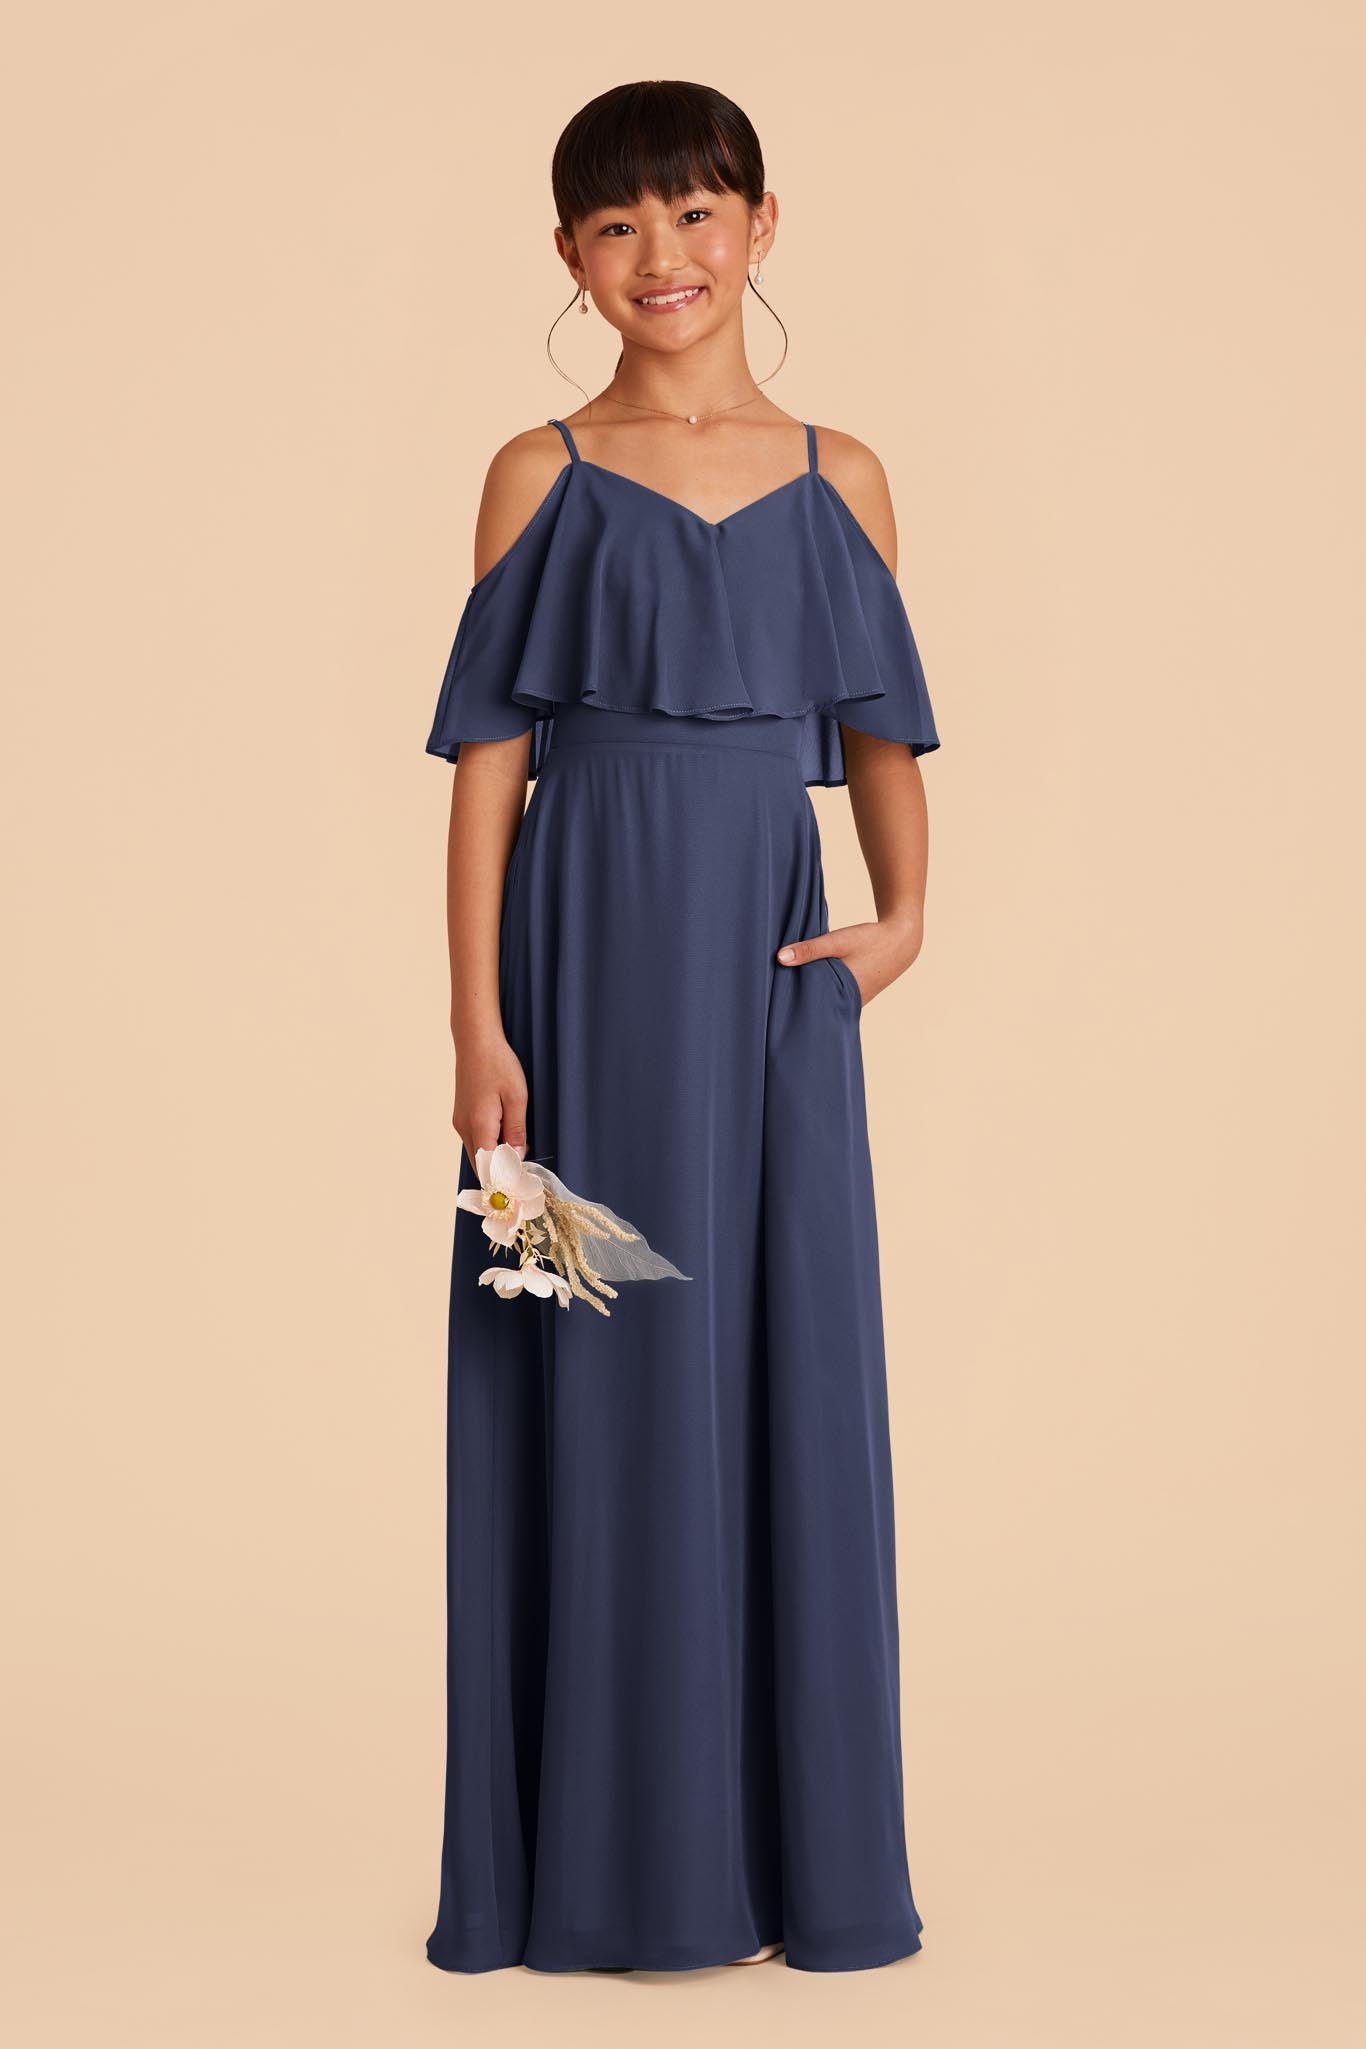 Slate Blue Janie Convertible Junior Dress by Birdy Grey